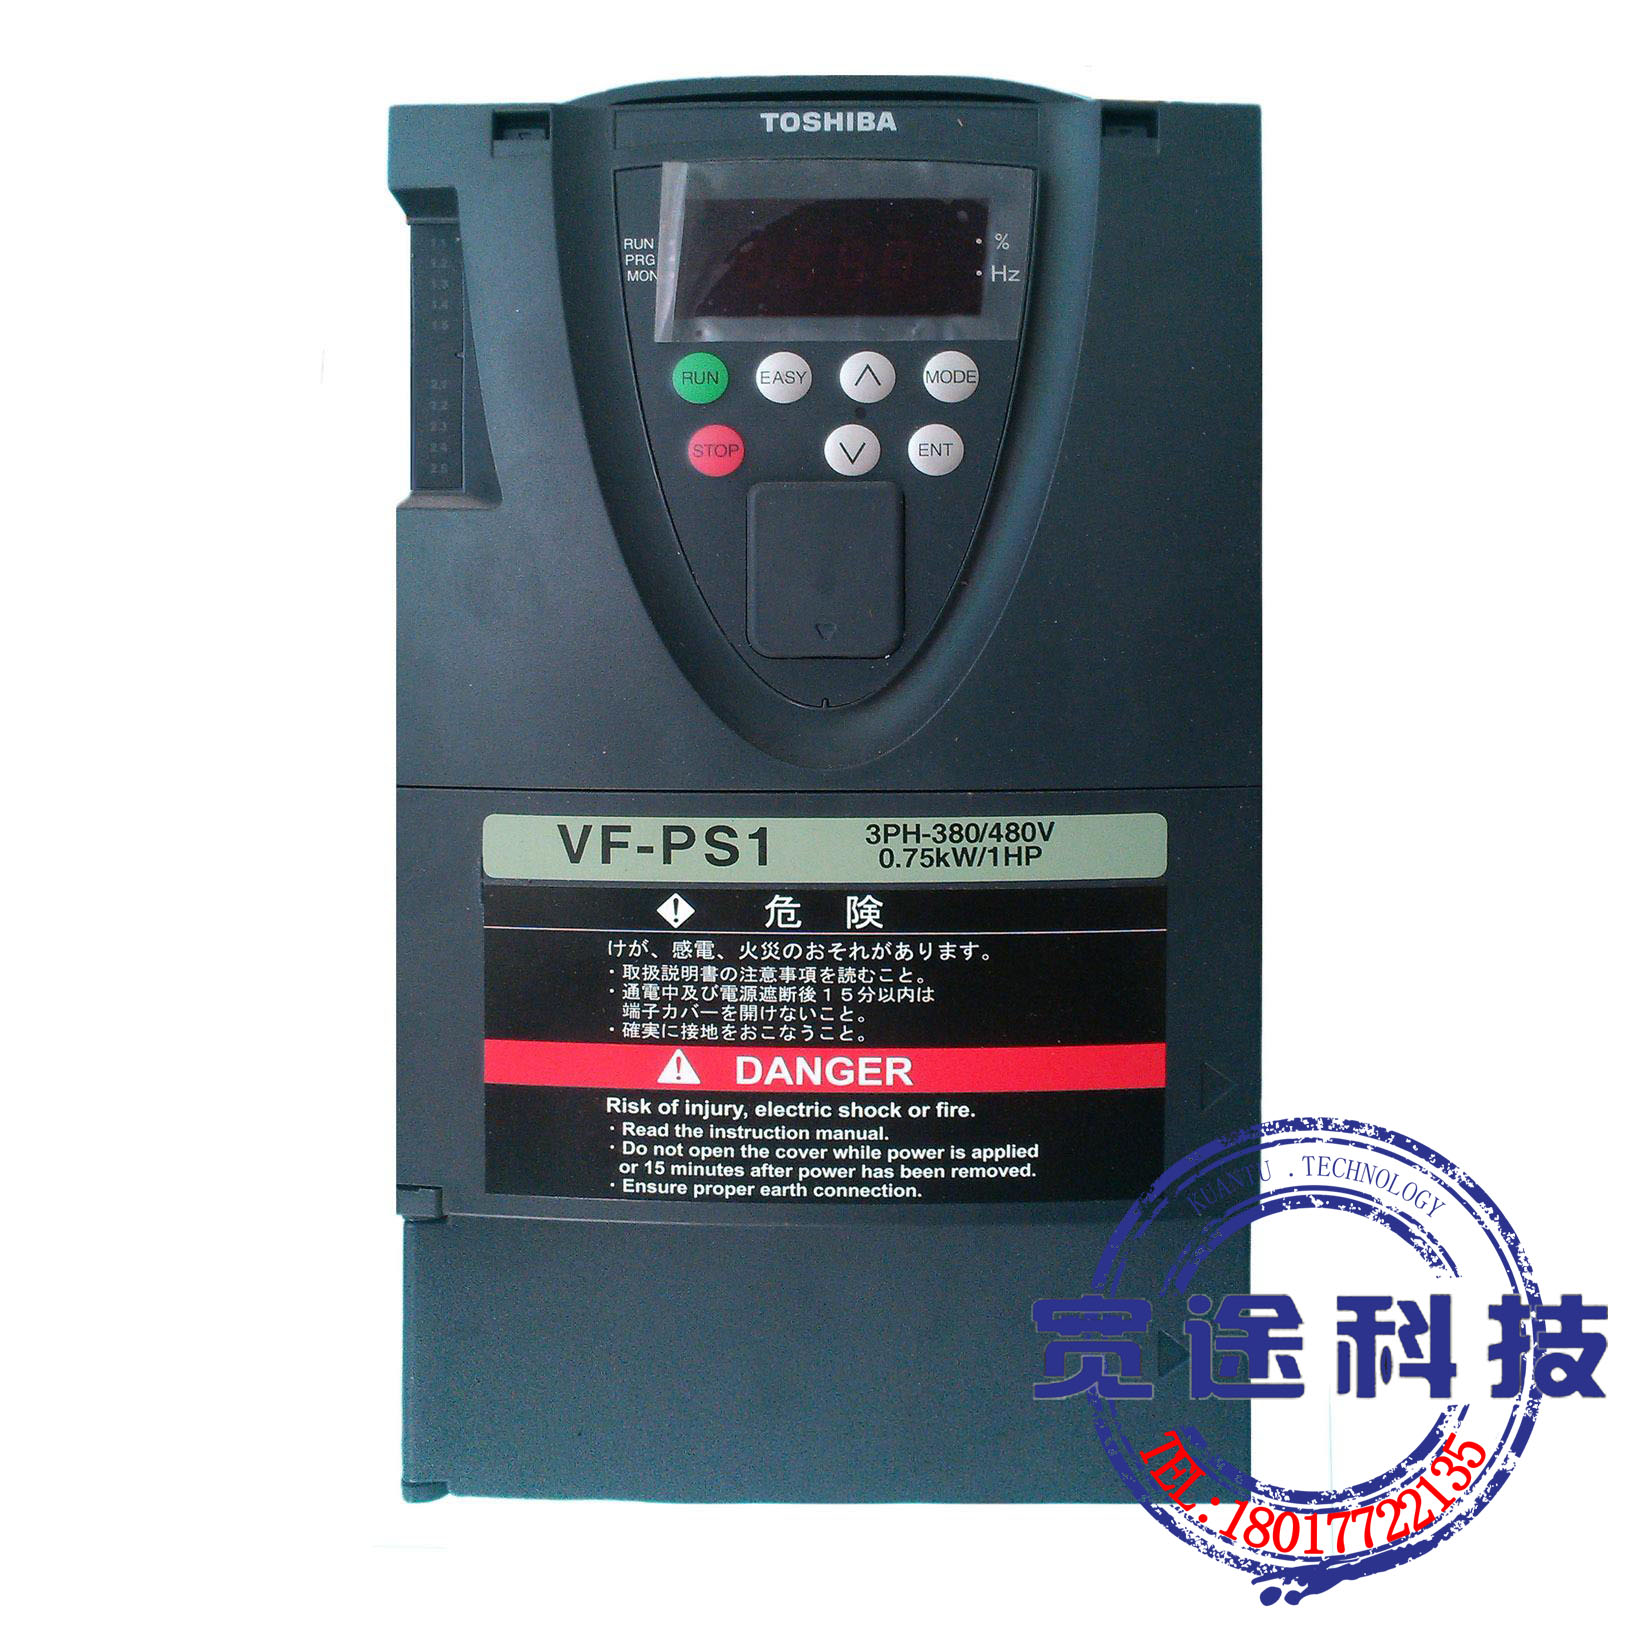 VFnC3S-2002PL 0.2kW 内置PI功能 东芝